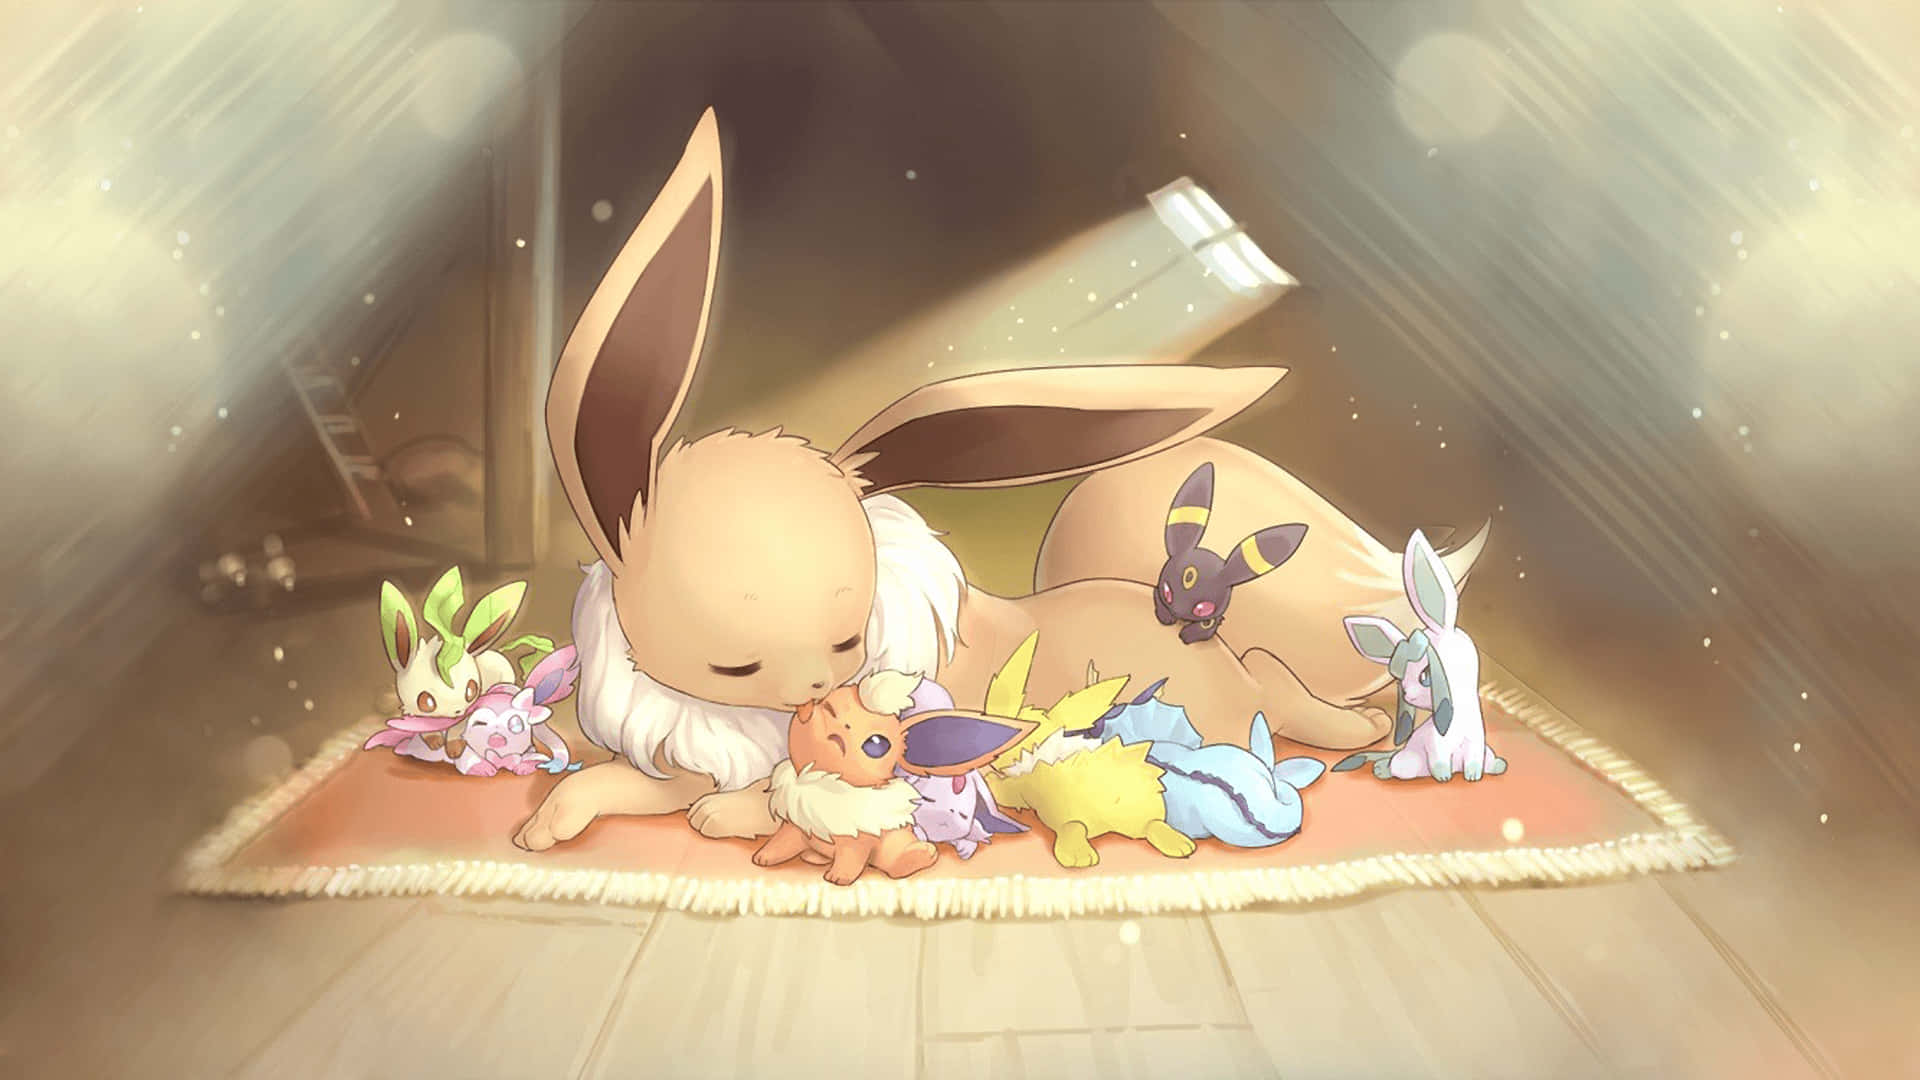 Enjoying a Heartwarming Moment - Cute Pikachu and Eevee Together Wallpaper